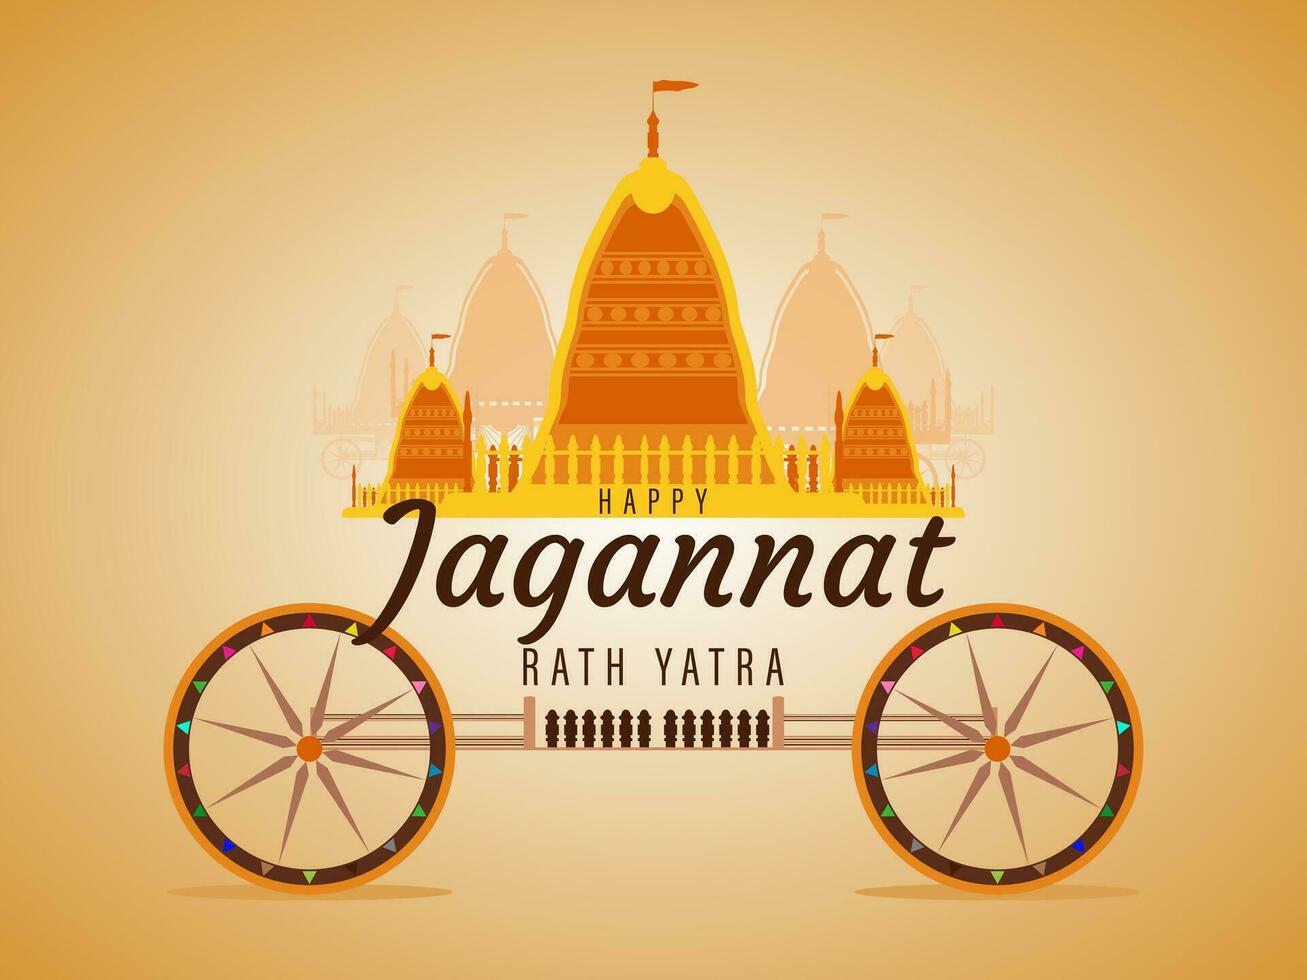 jagannath rath yatra, vettore illustrazione